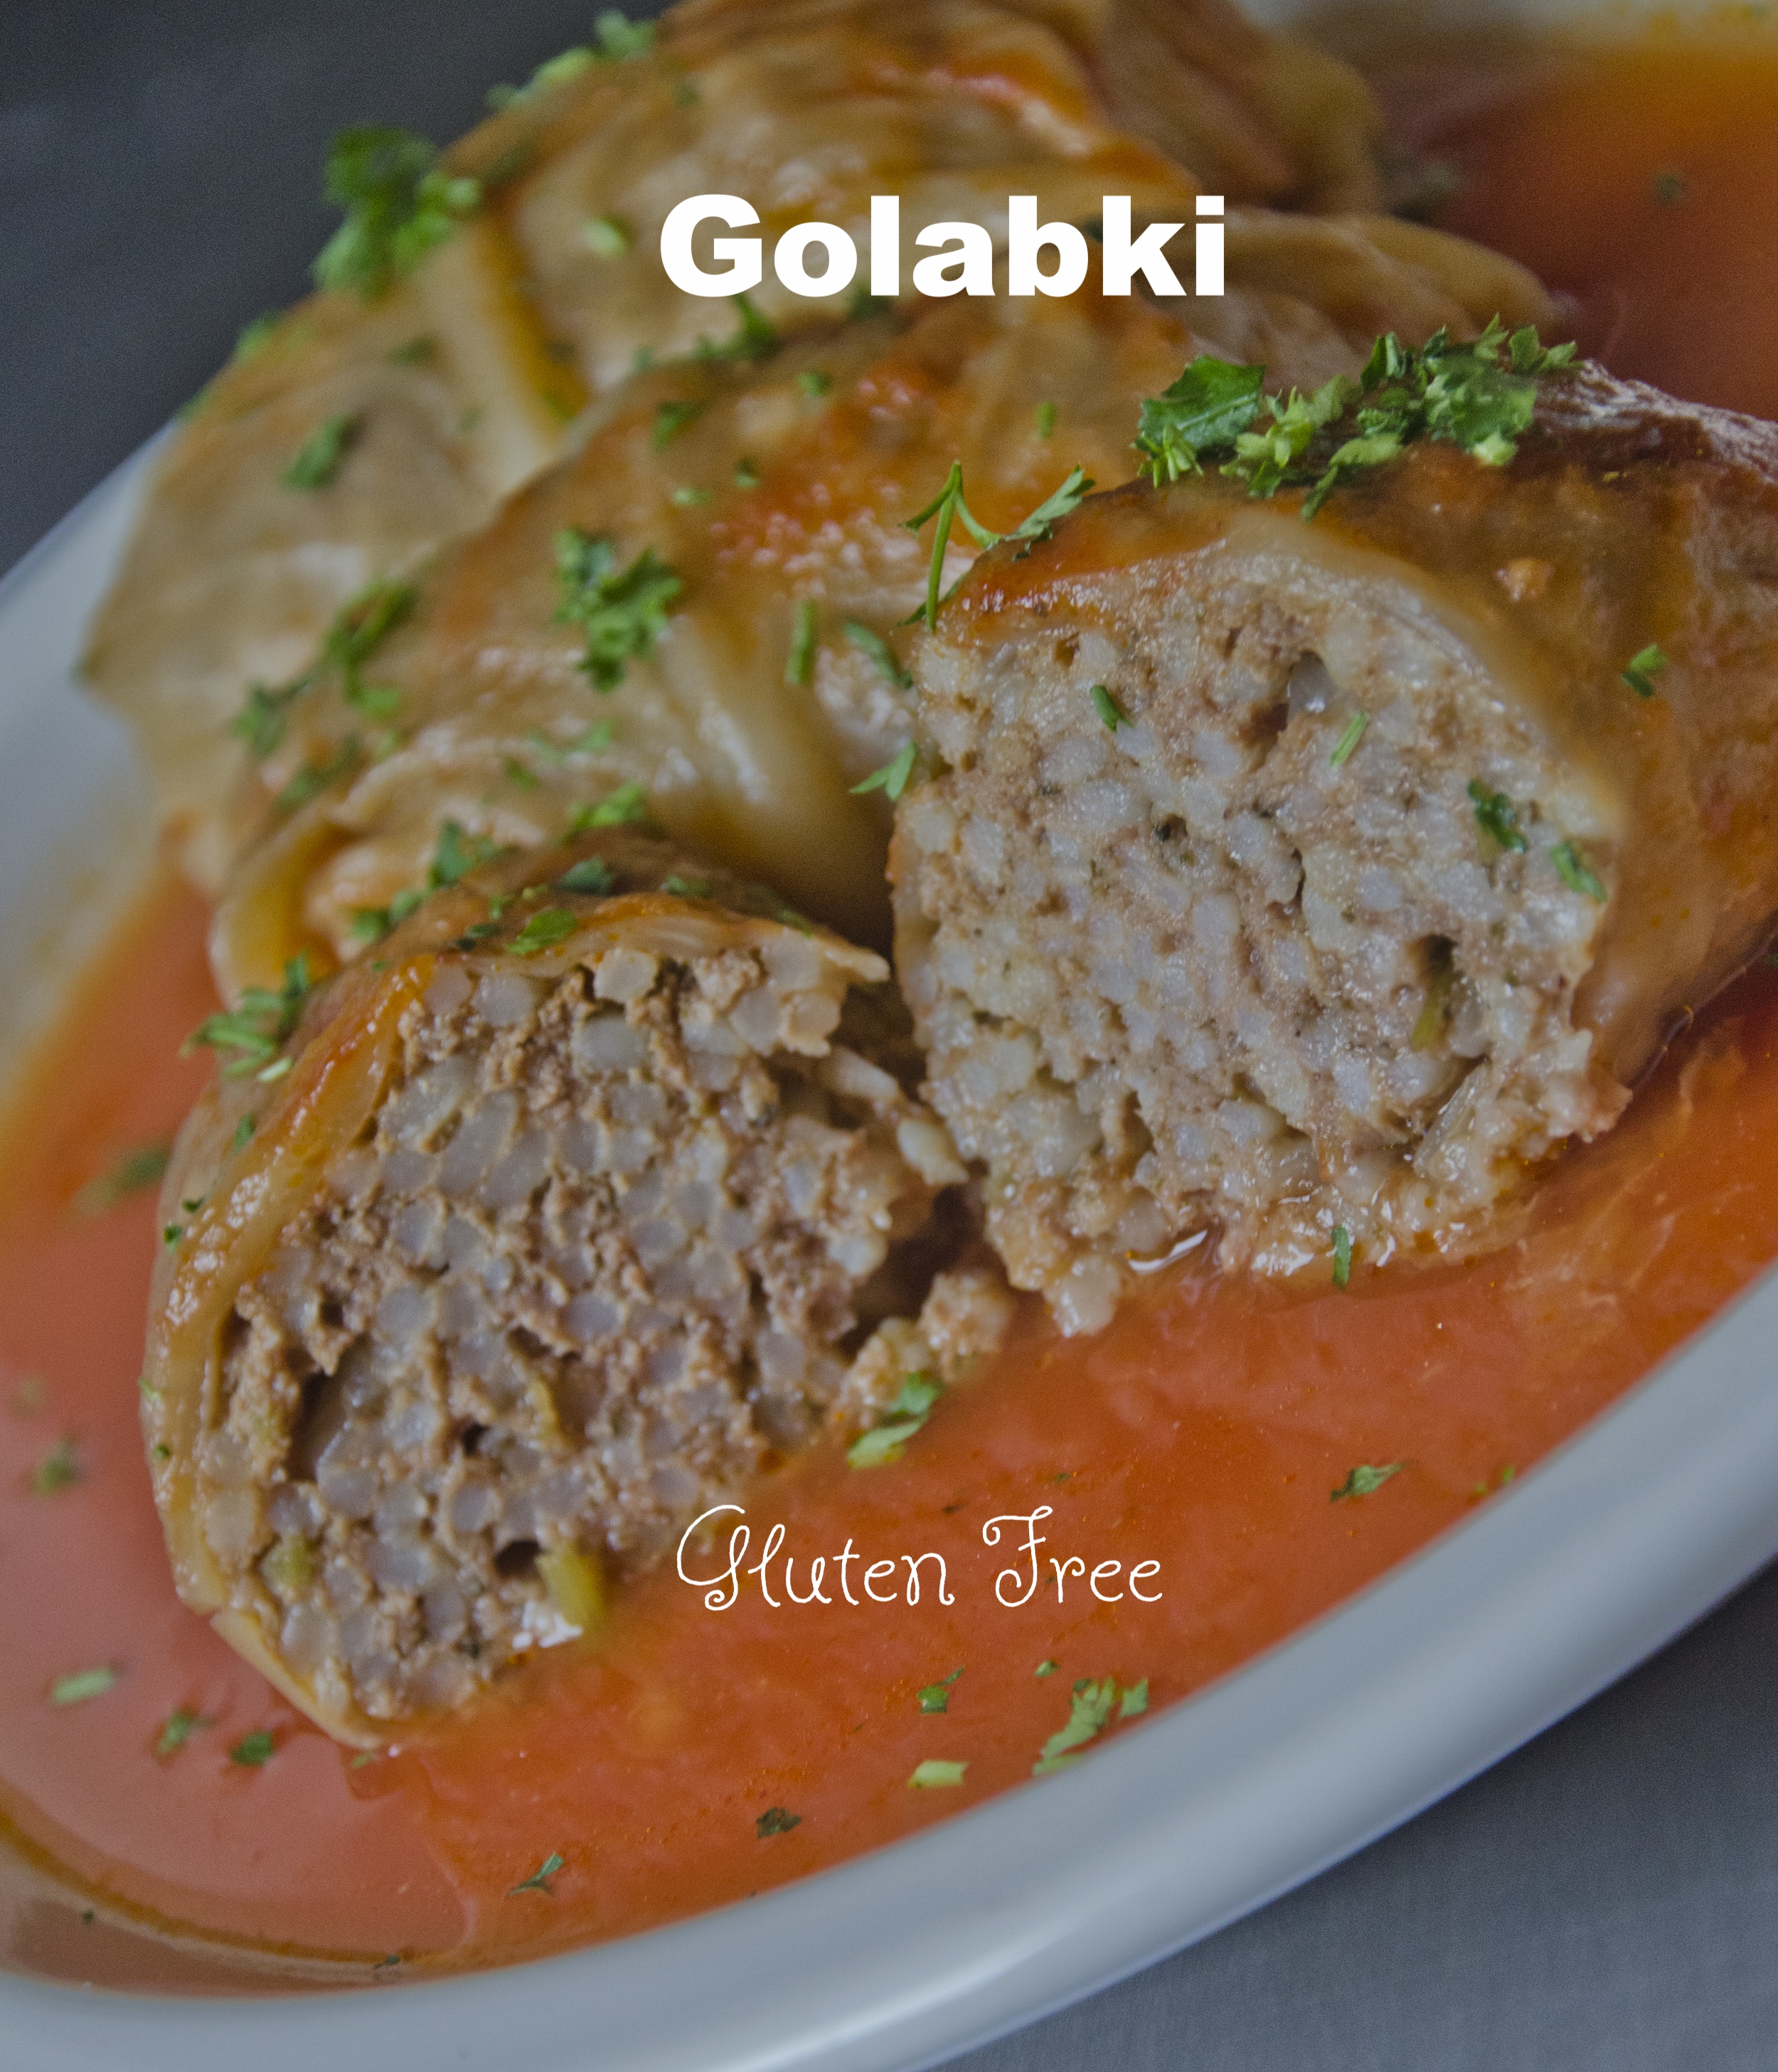 Food - Golabki Sliced.jpg